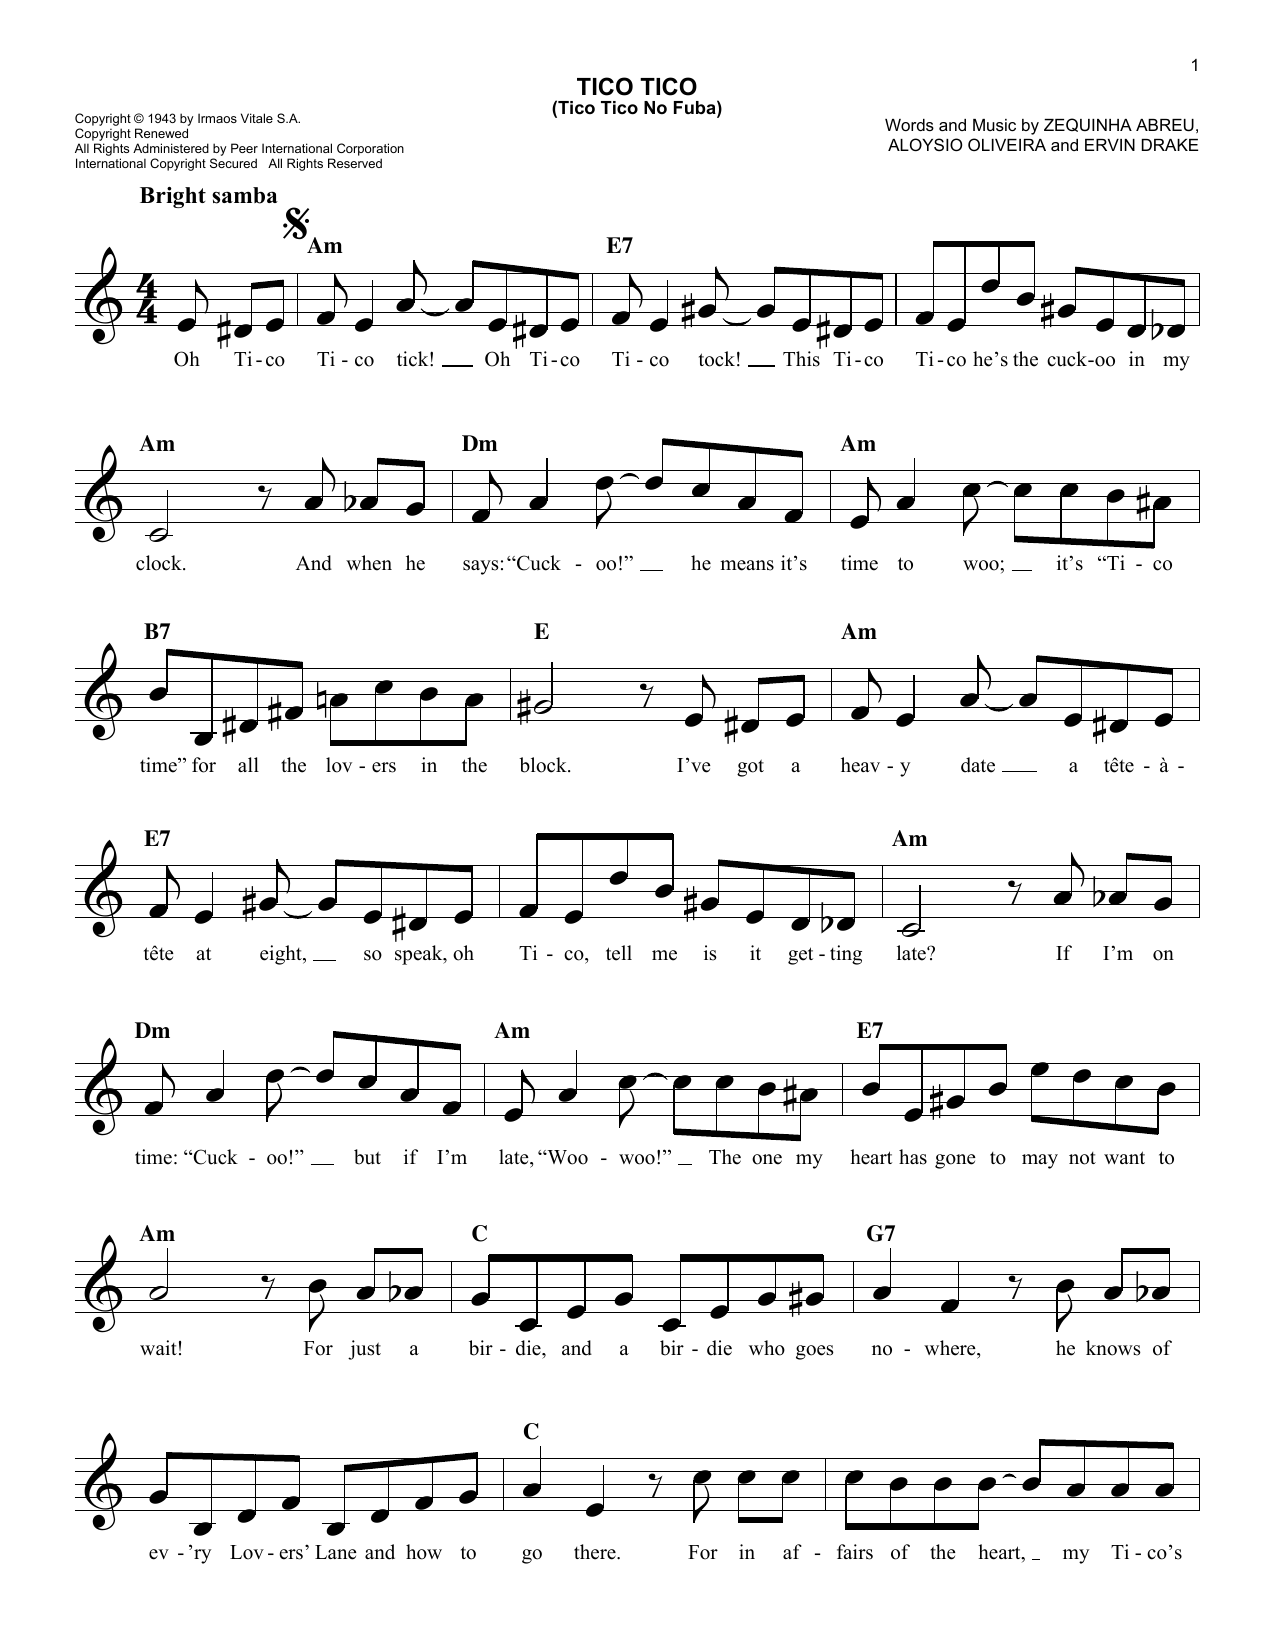 The Andrews Sisters Tico Tico (Tico Tico No Fuba) Sheet Music Notes & Chords for Melody Line, Lyrics & Chords - Download or Print PDF